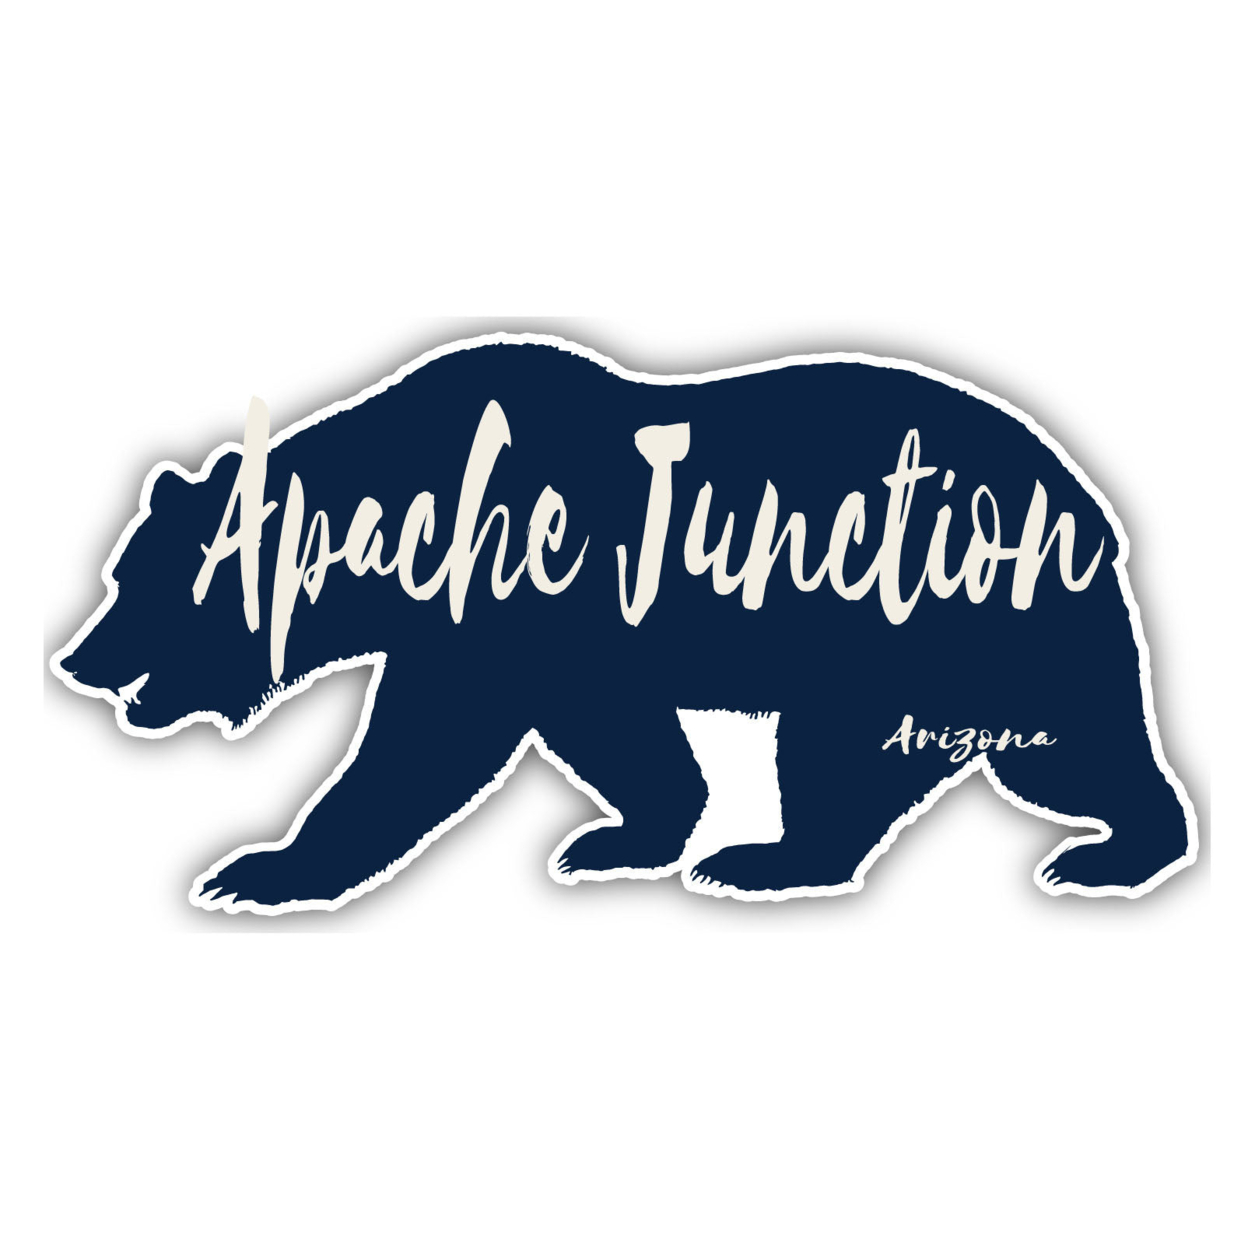 Apache Junction Arizona Souvenir Decorative Stickers (Choose Theme And Size) - 4-Pack, 2-Inch, Bear